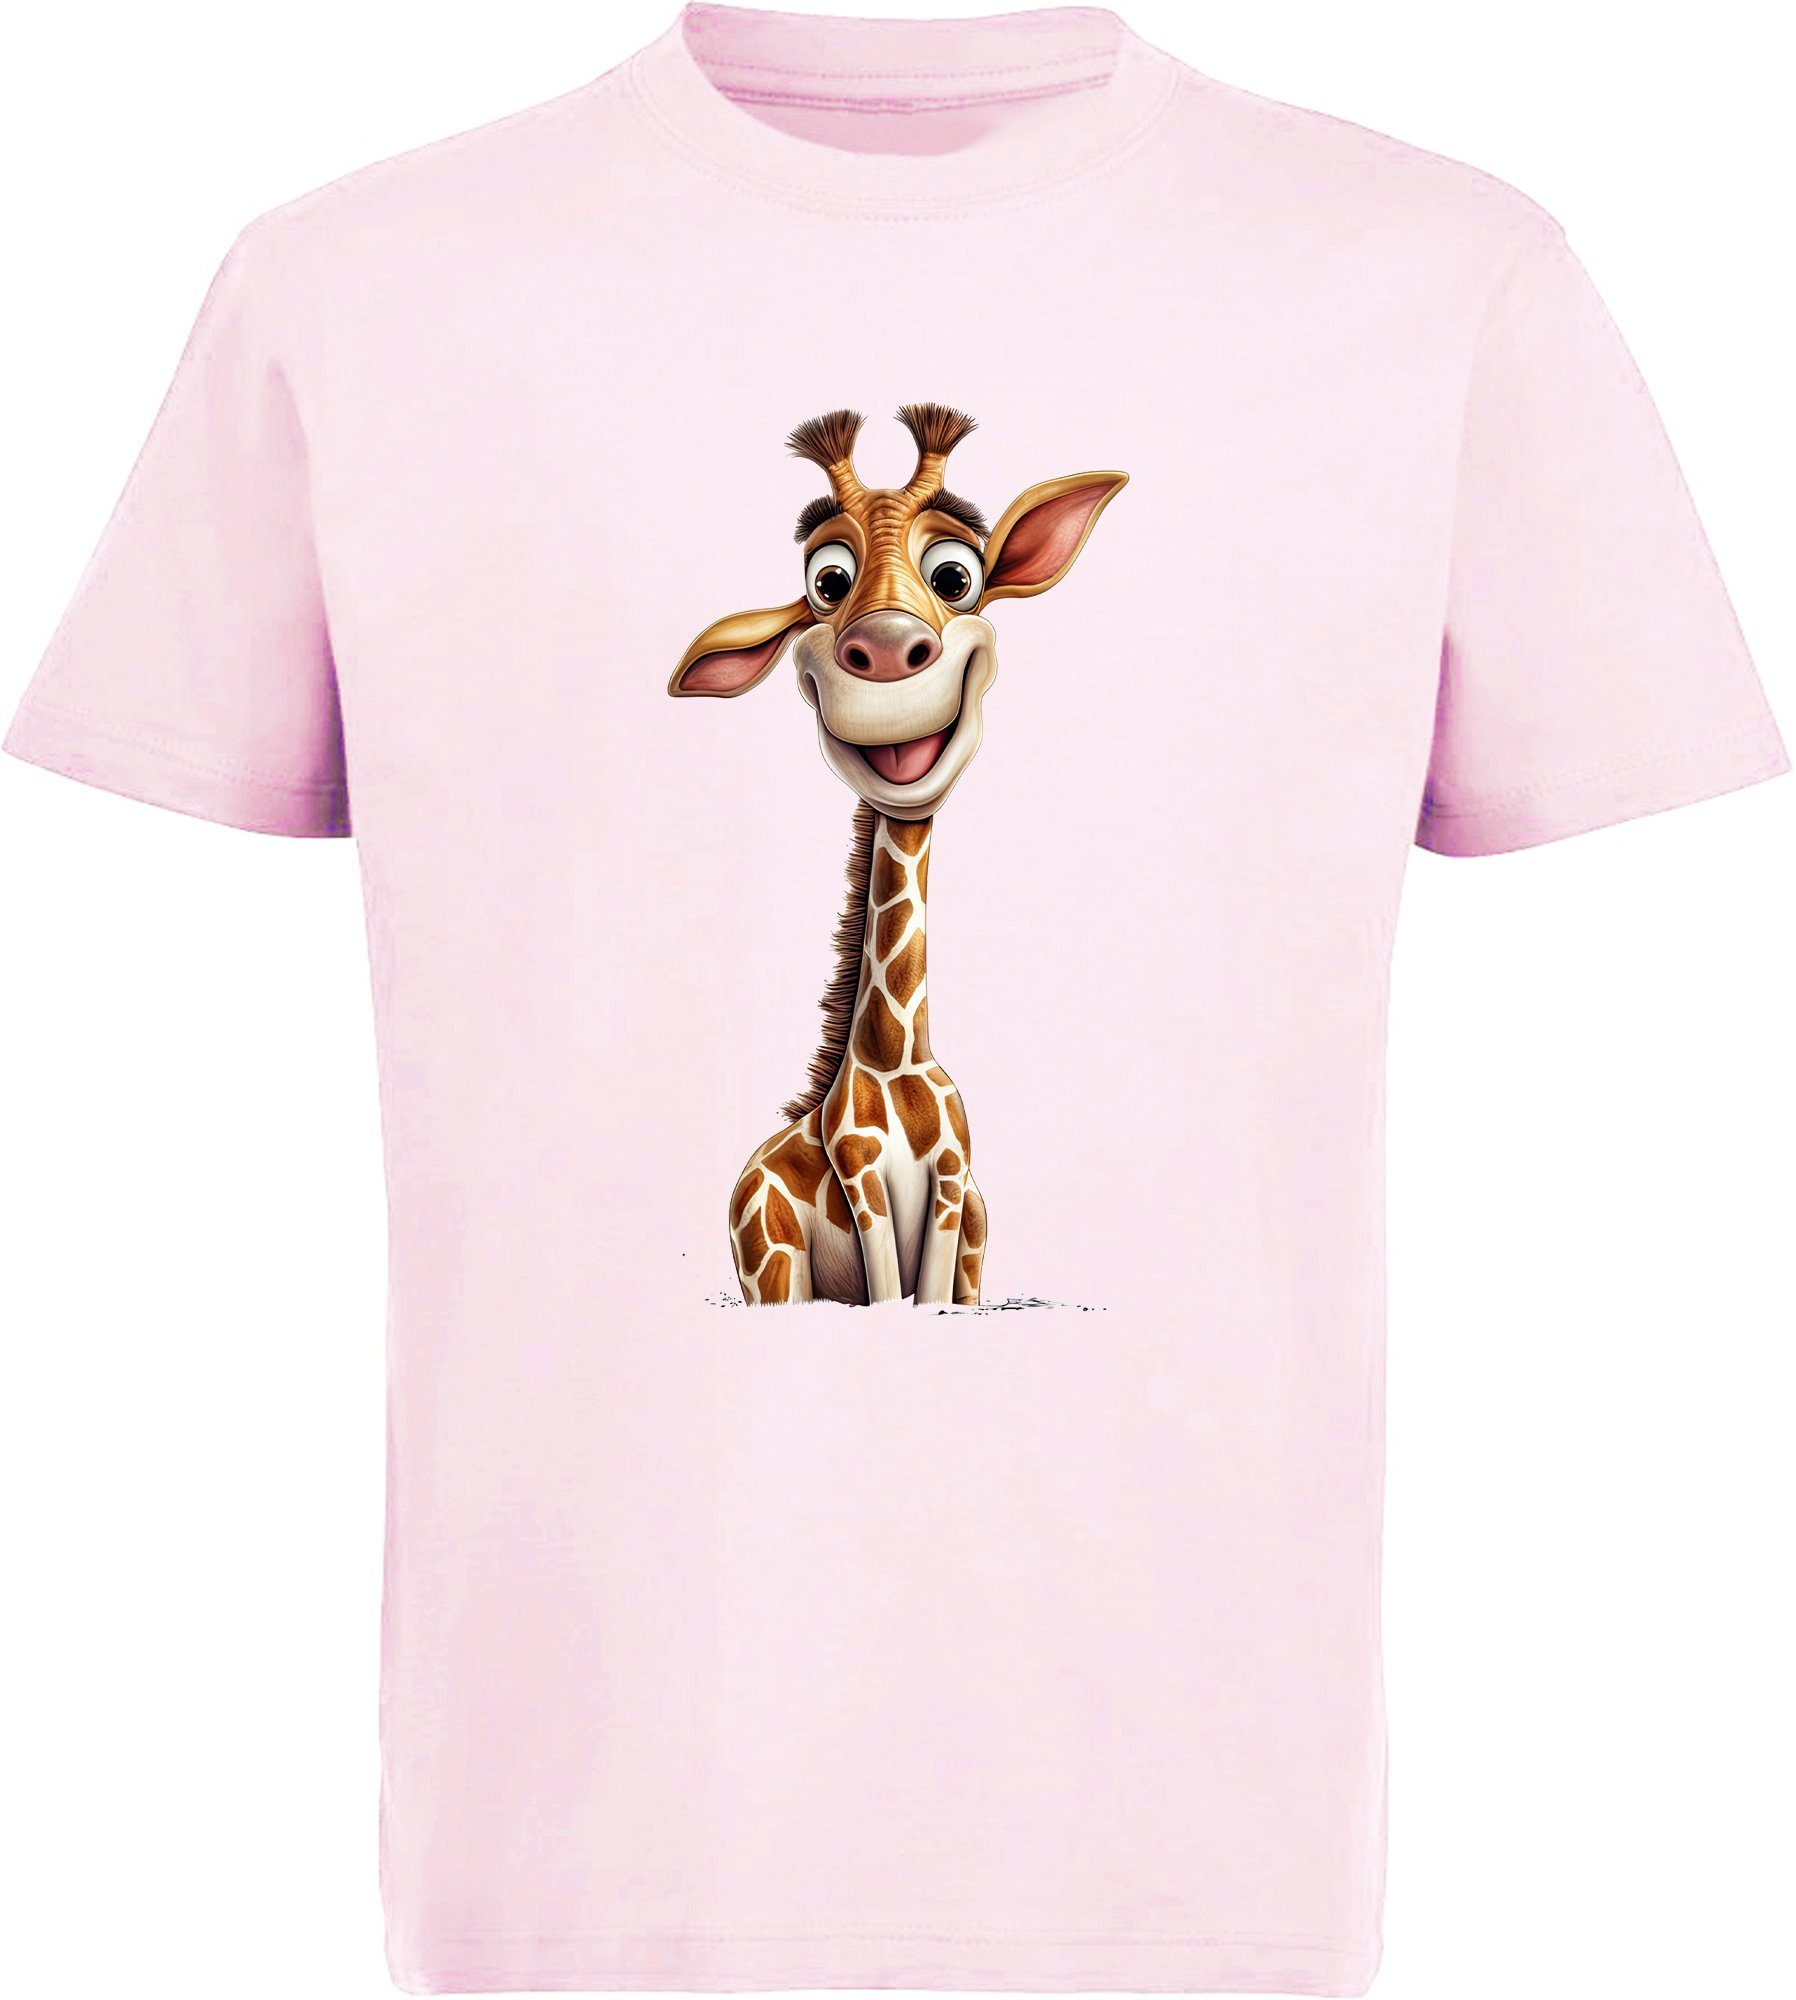 mit Baby Wildtier T-Shirt Shirt - Kinder Aufdruck, i273 Baumwollshirt bedruckt MyDesign24 rosa Print Giraffe